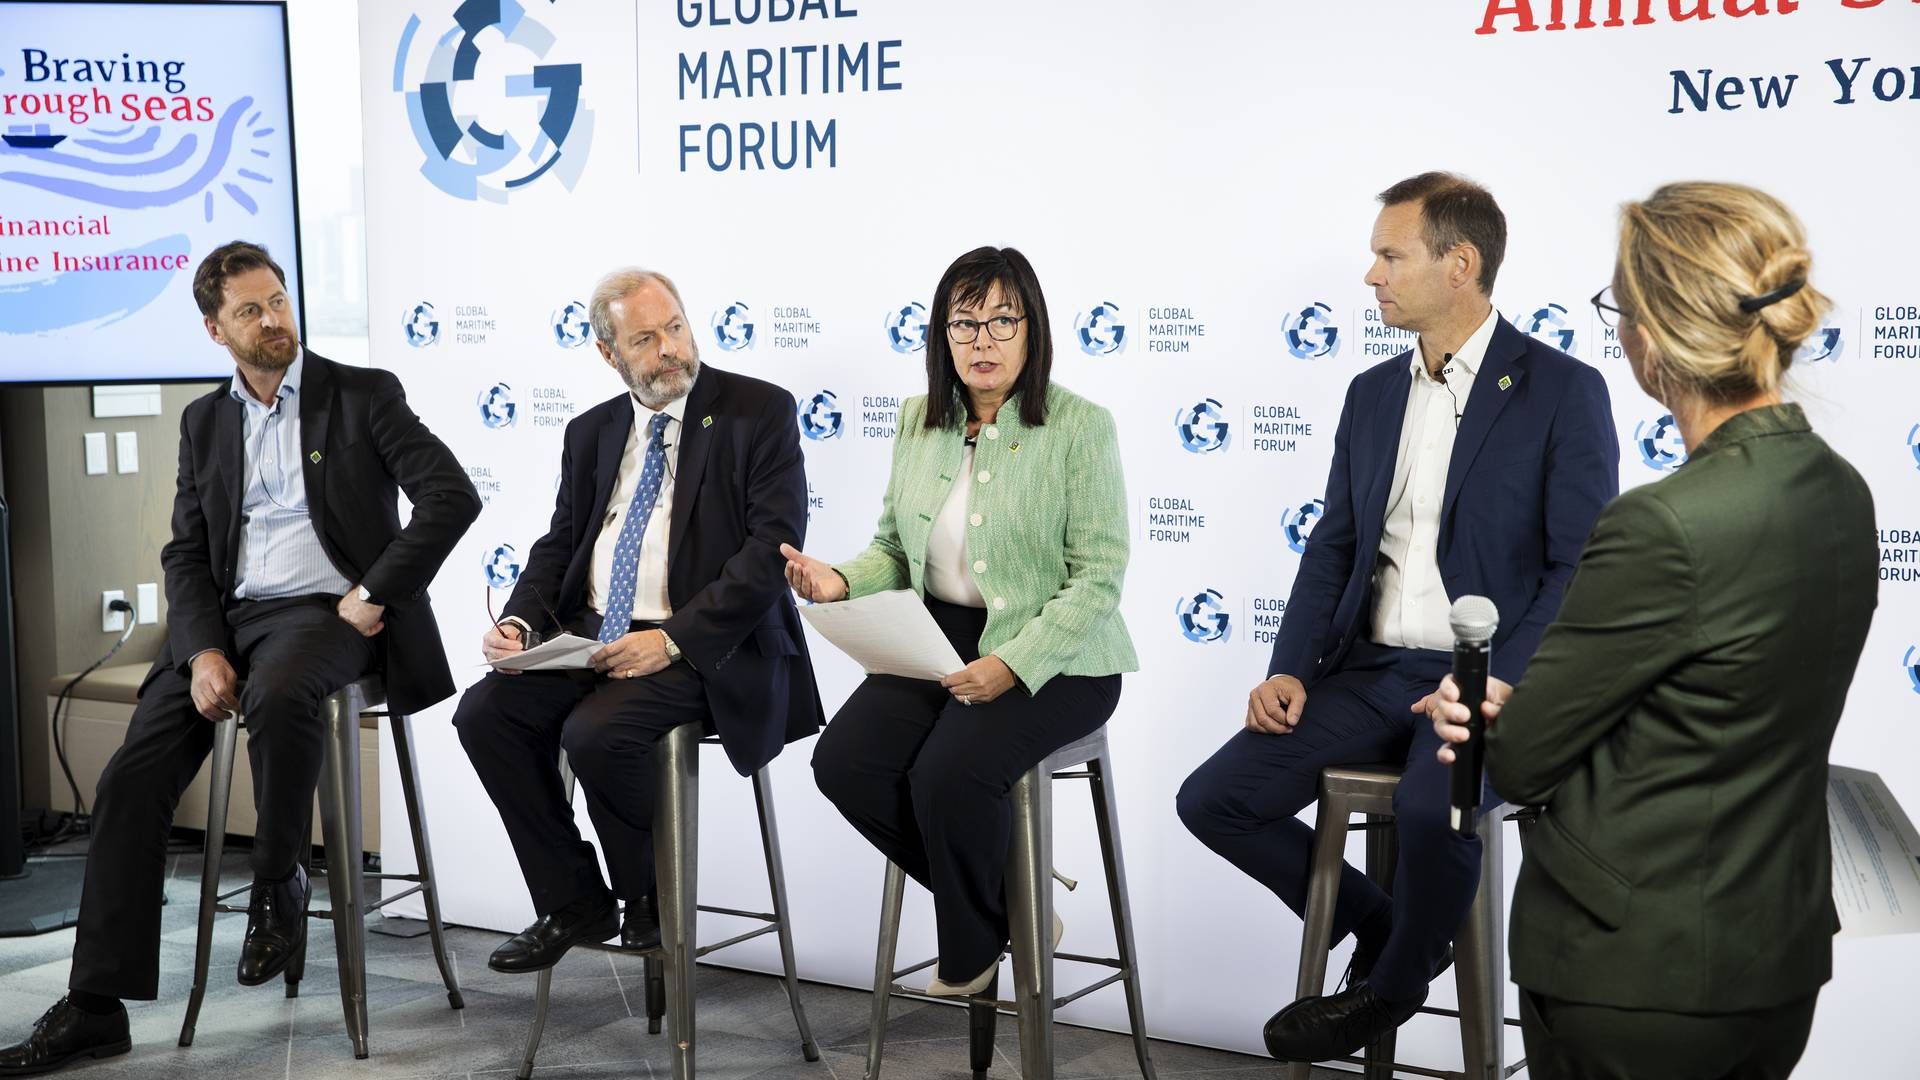 Foto: Ty Stange/Global Maritime Forum